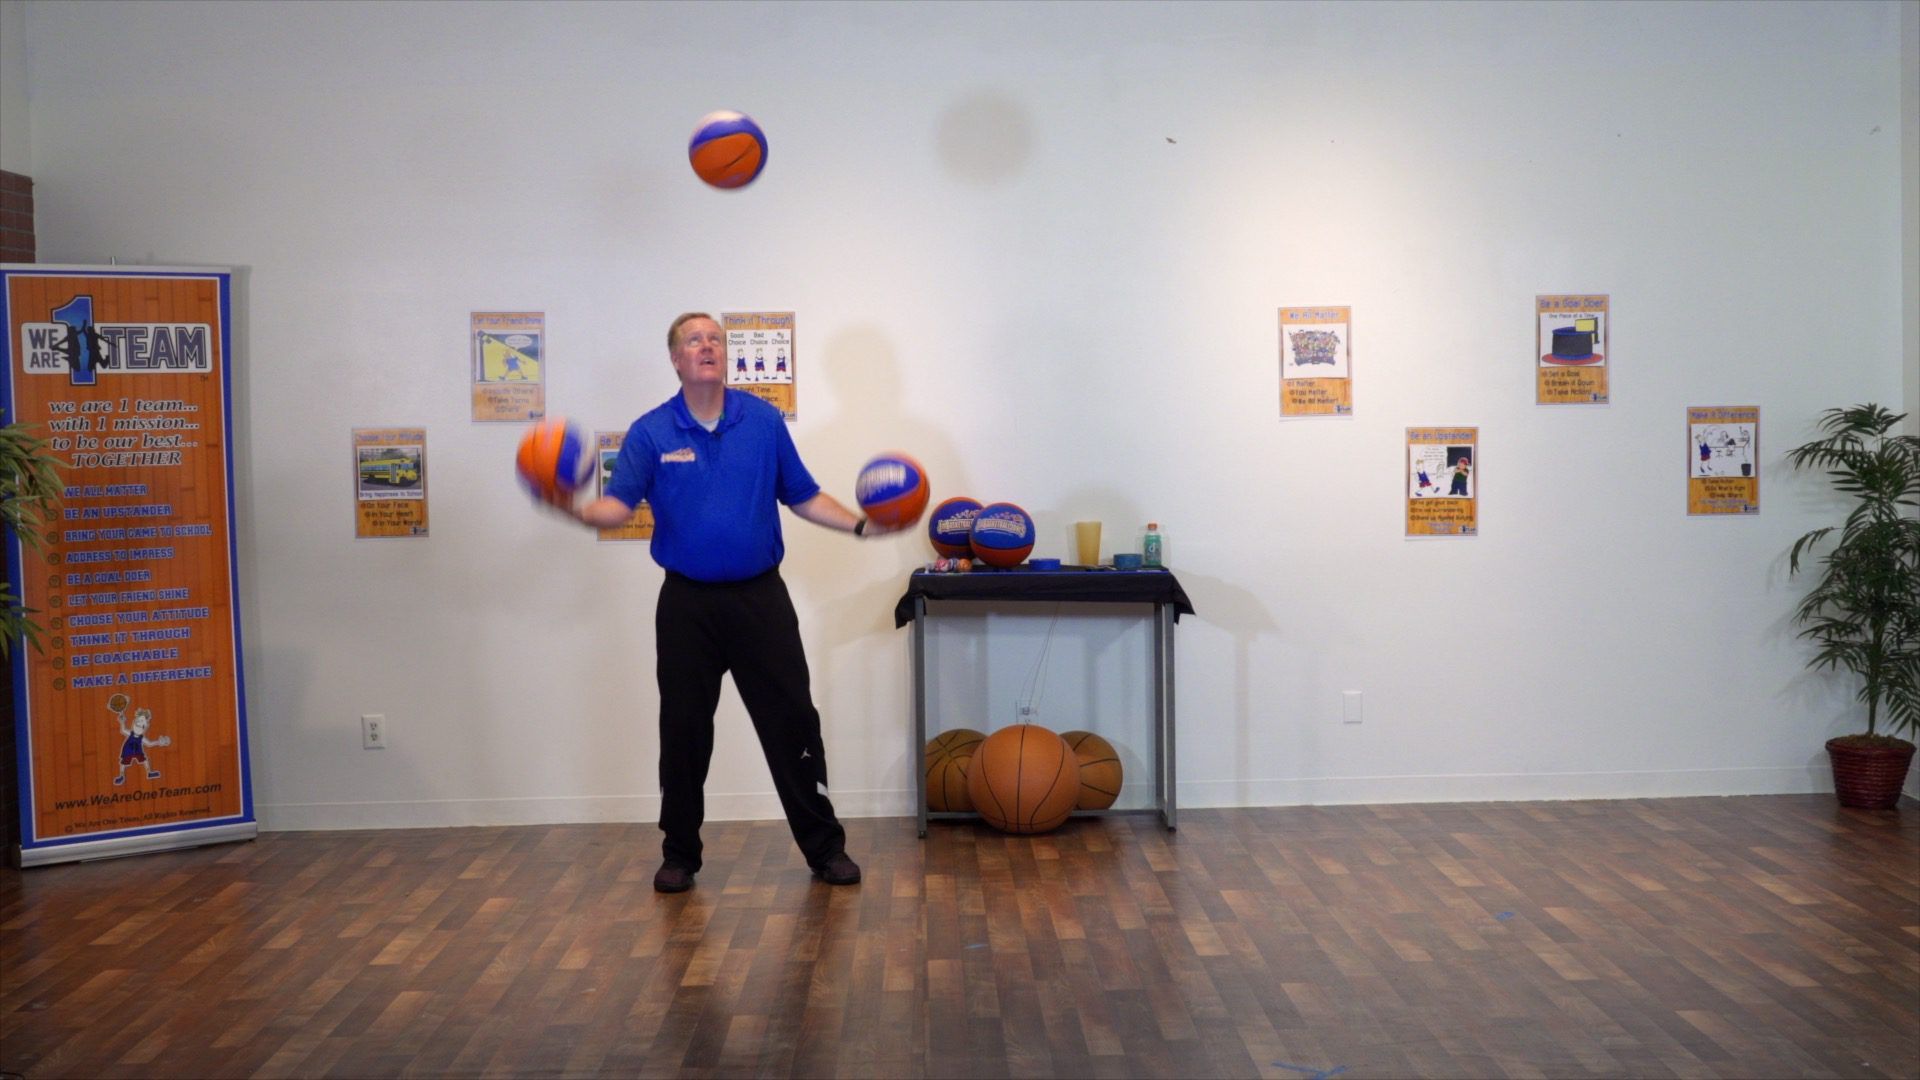 Jim Basketball Jones in modifiable area in video studio